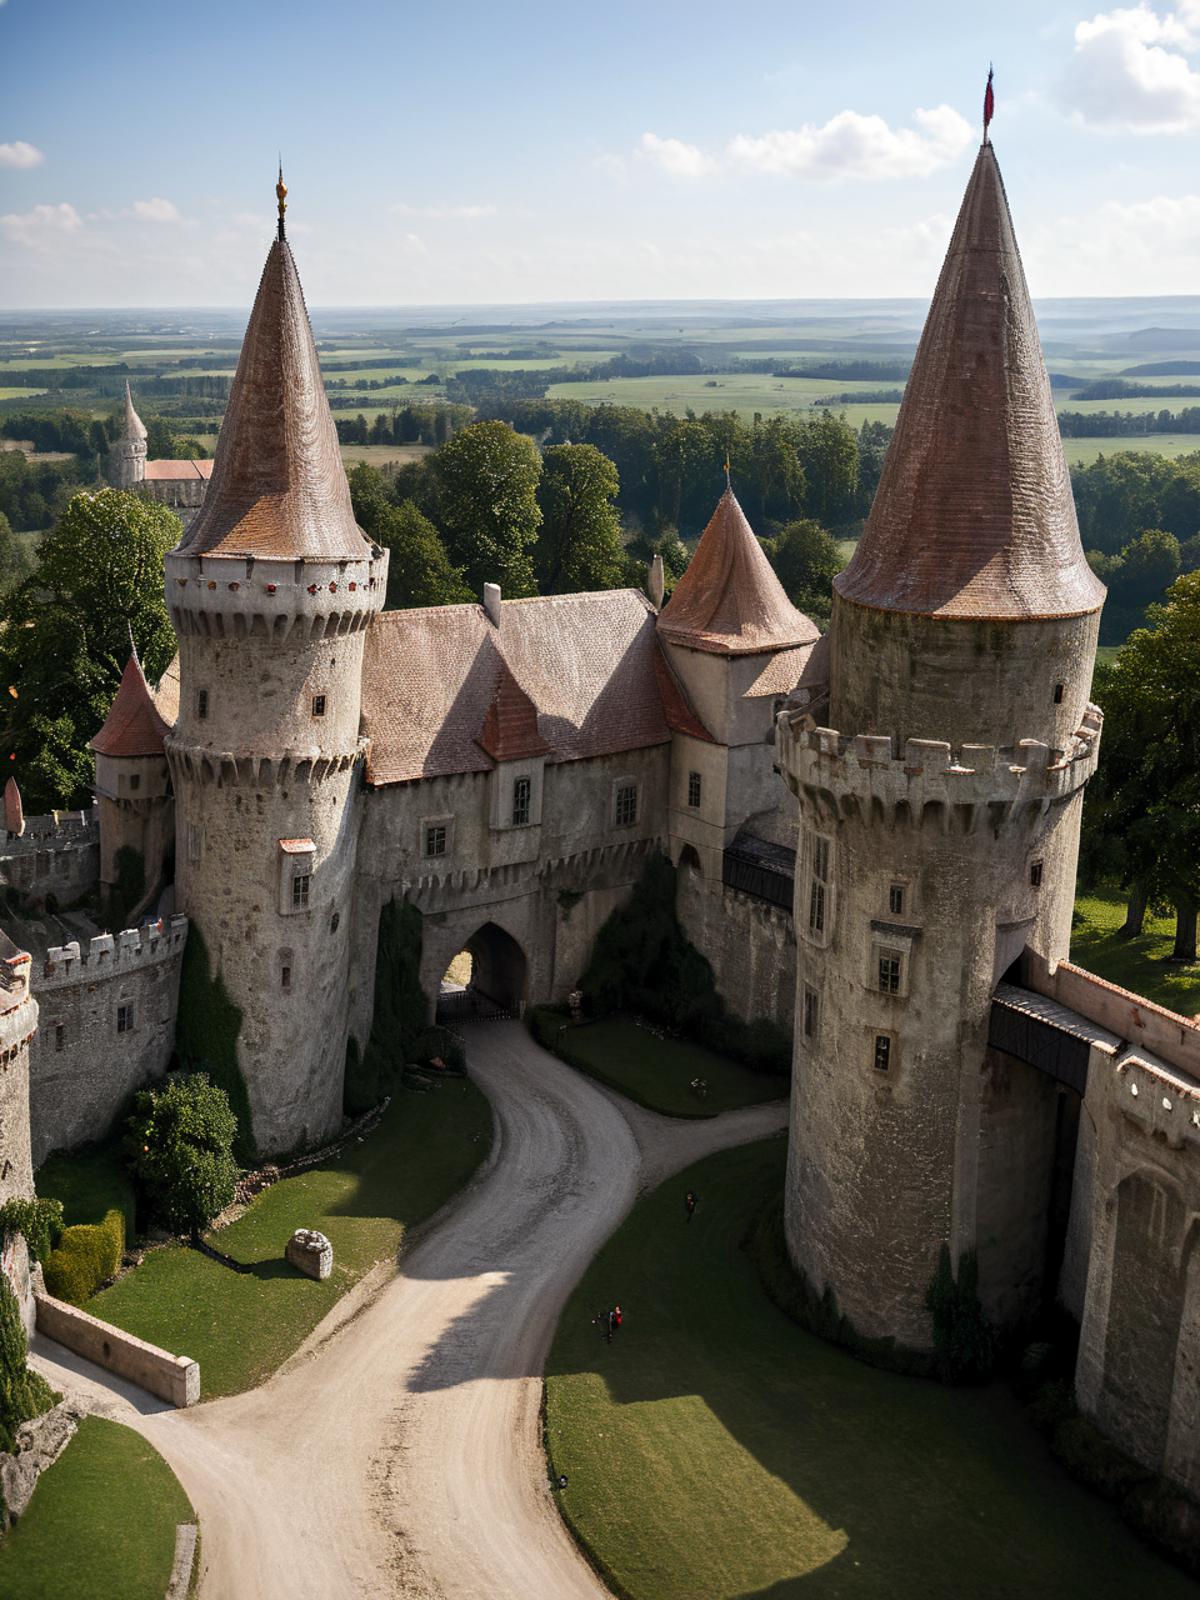 Castle_manor image by MarekLubomirovic